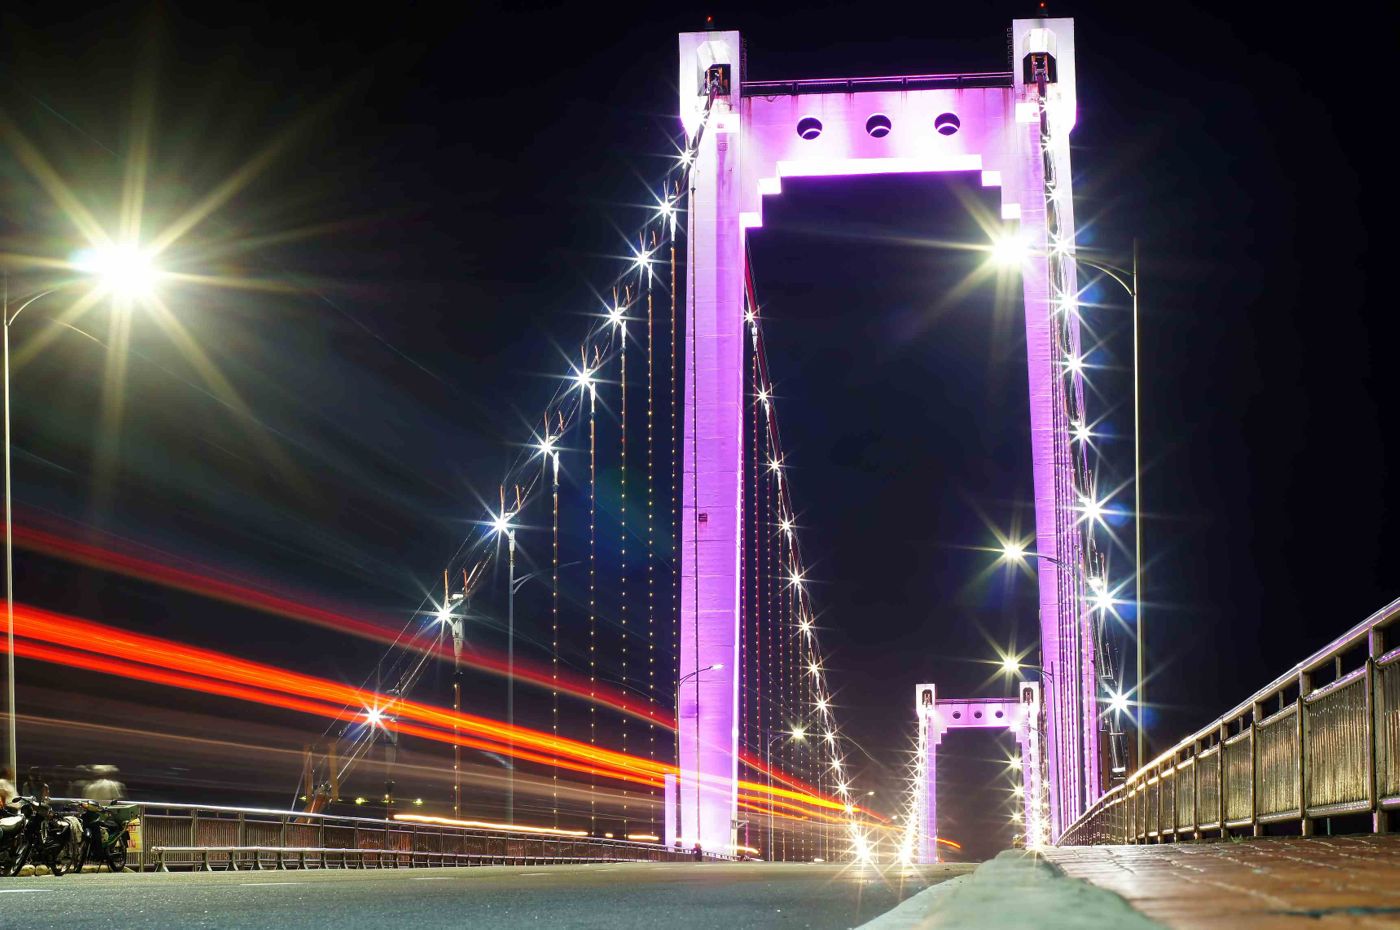 Thuan Phuoc bridge